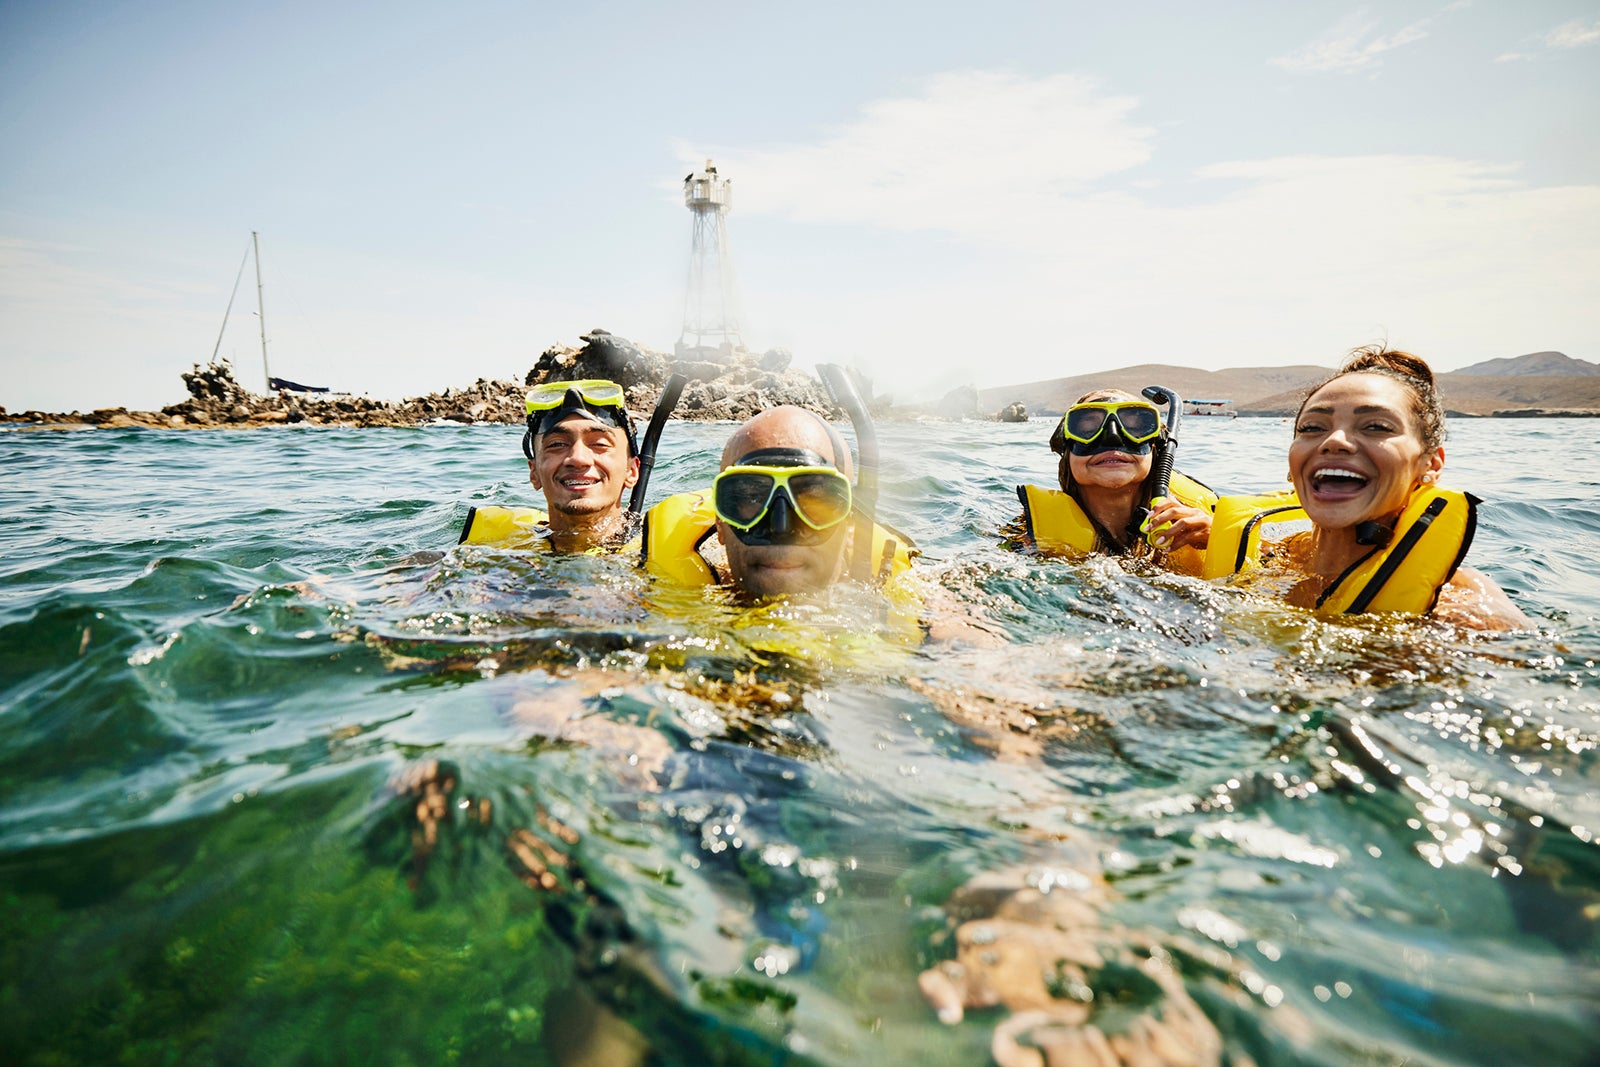 Medium shot of smiling family on snorkeling tour in tropical ocean